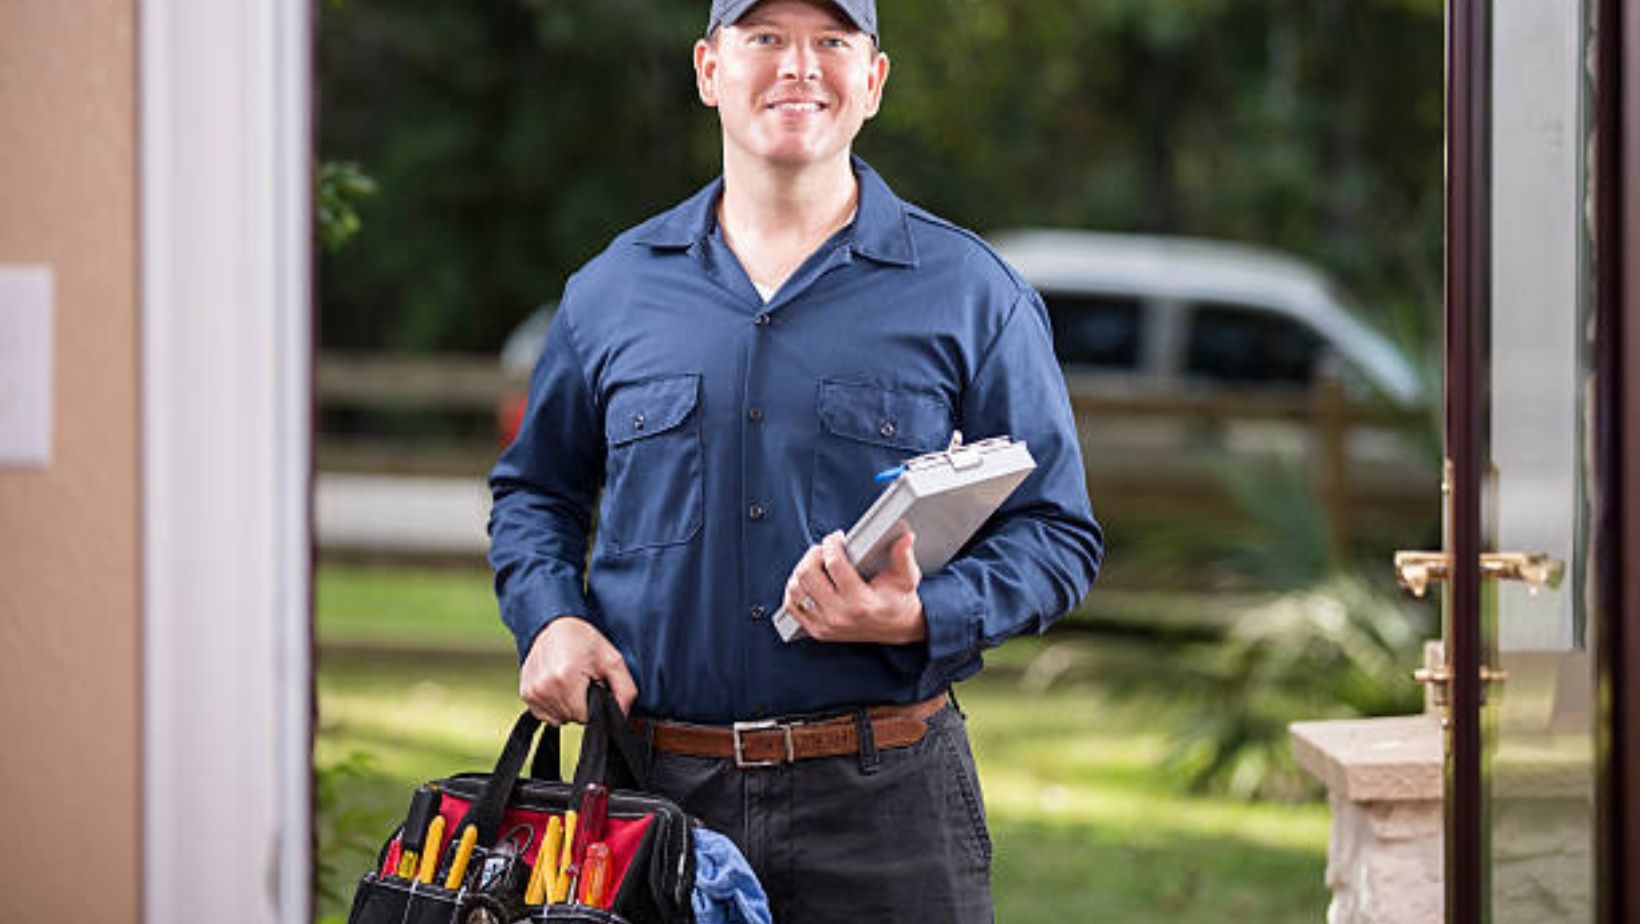 A man holding a tool bag